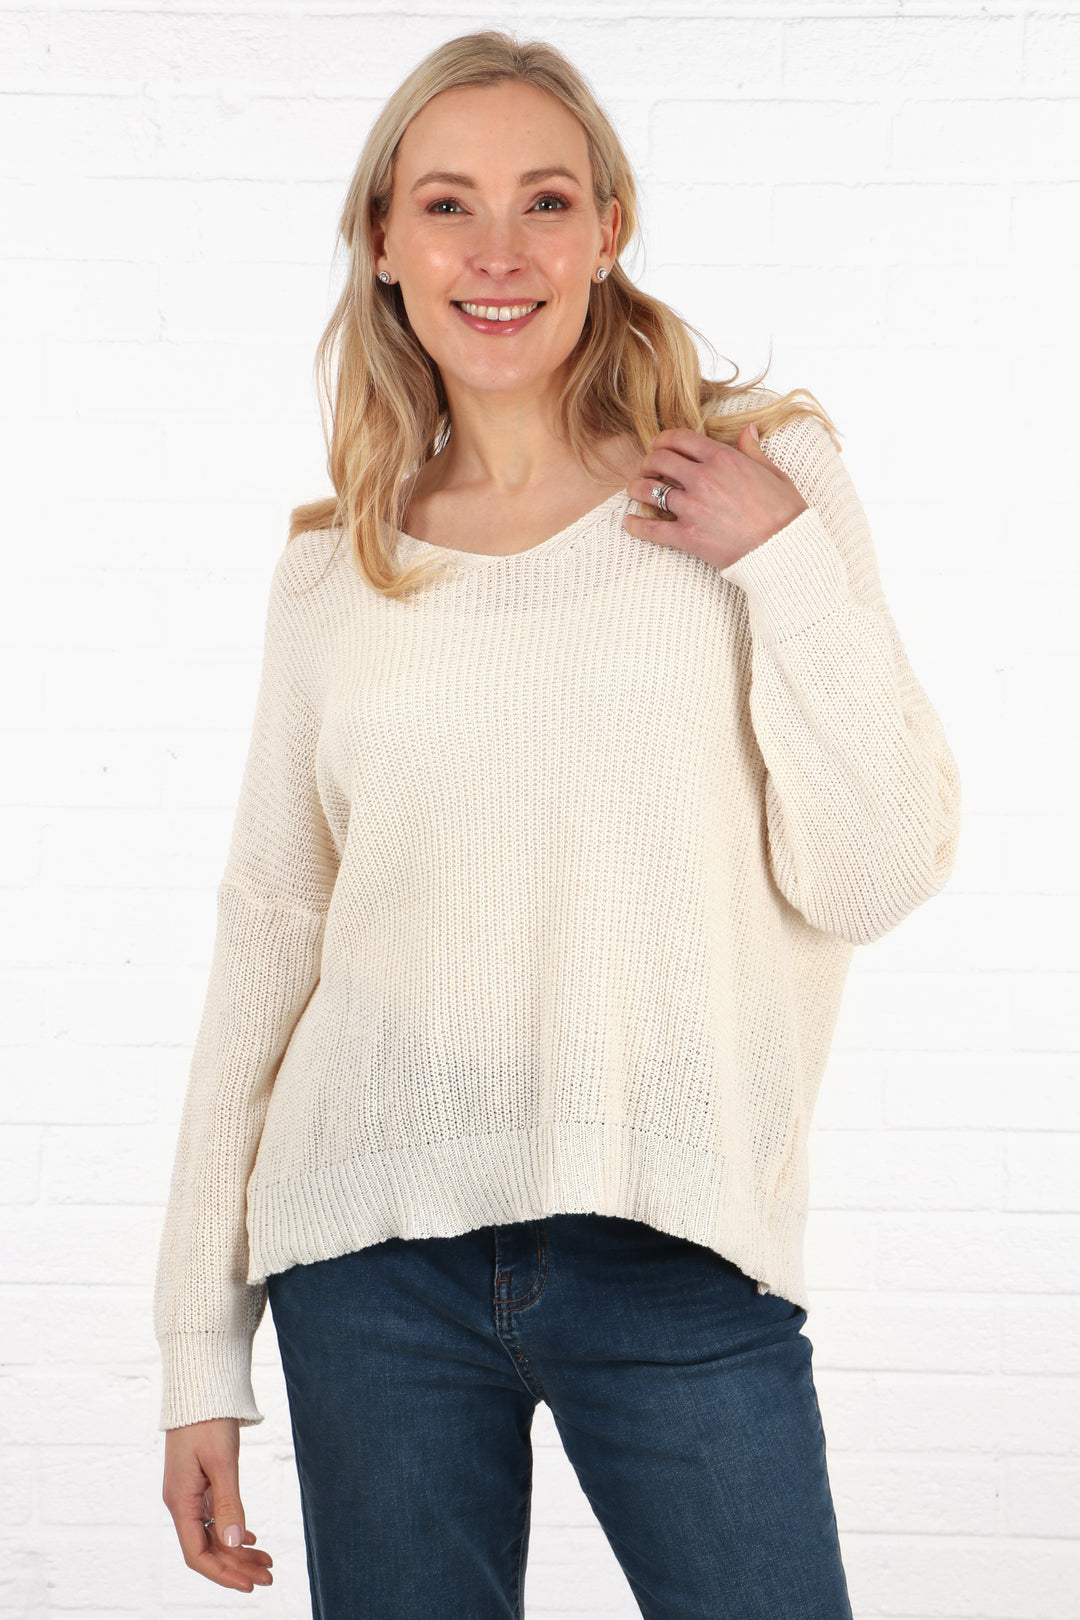 model wearing a lightweight cotton knitted jumper in cream